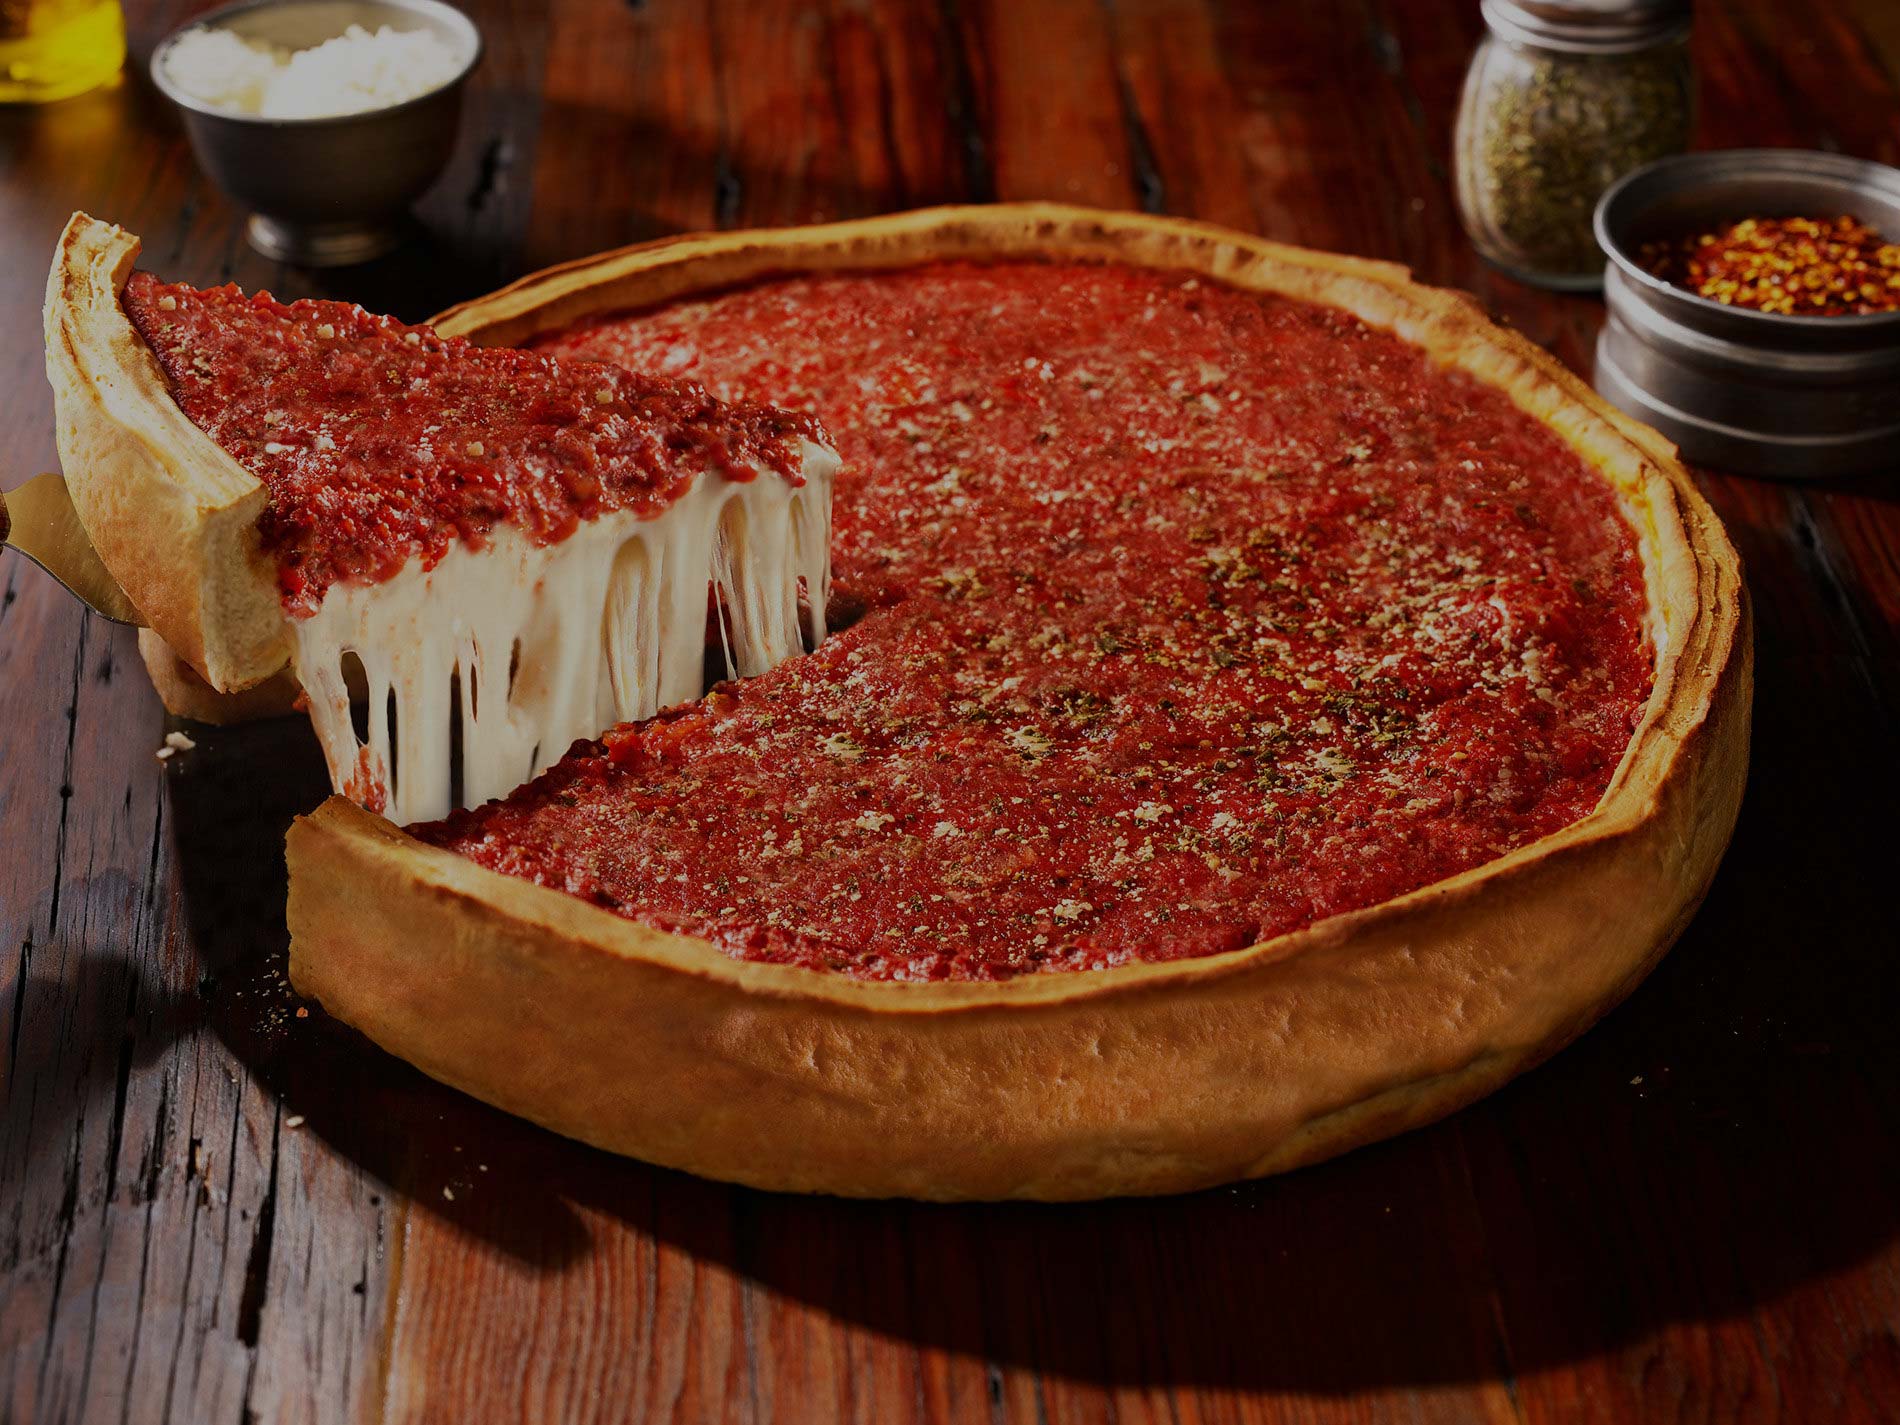 Giordano's world famous deep dish pizza since 1974